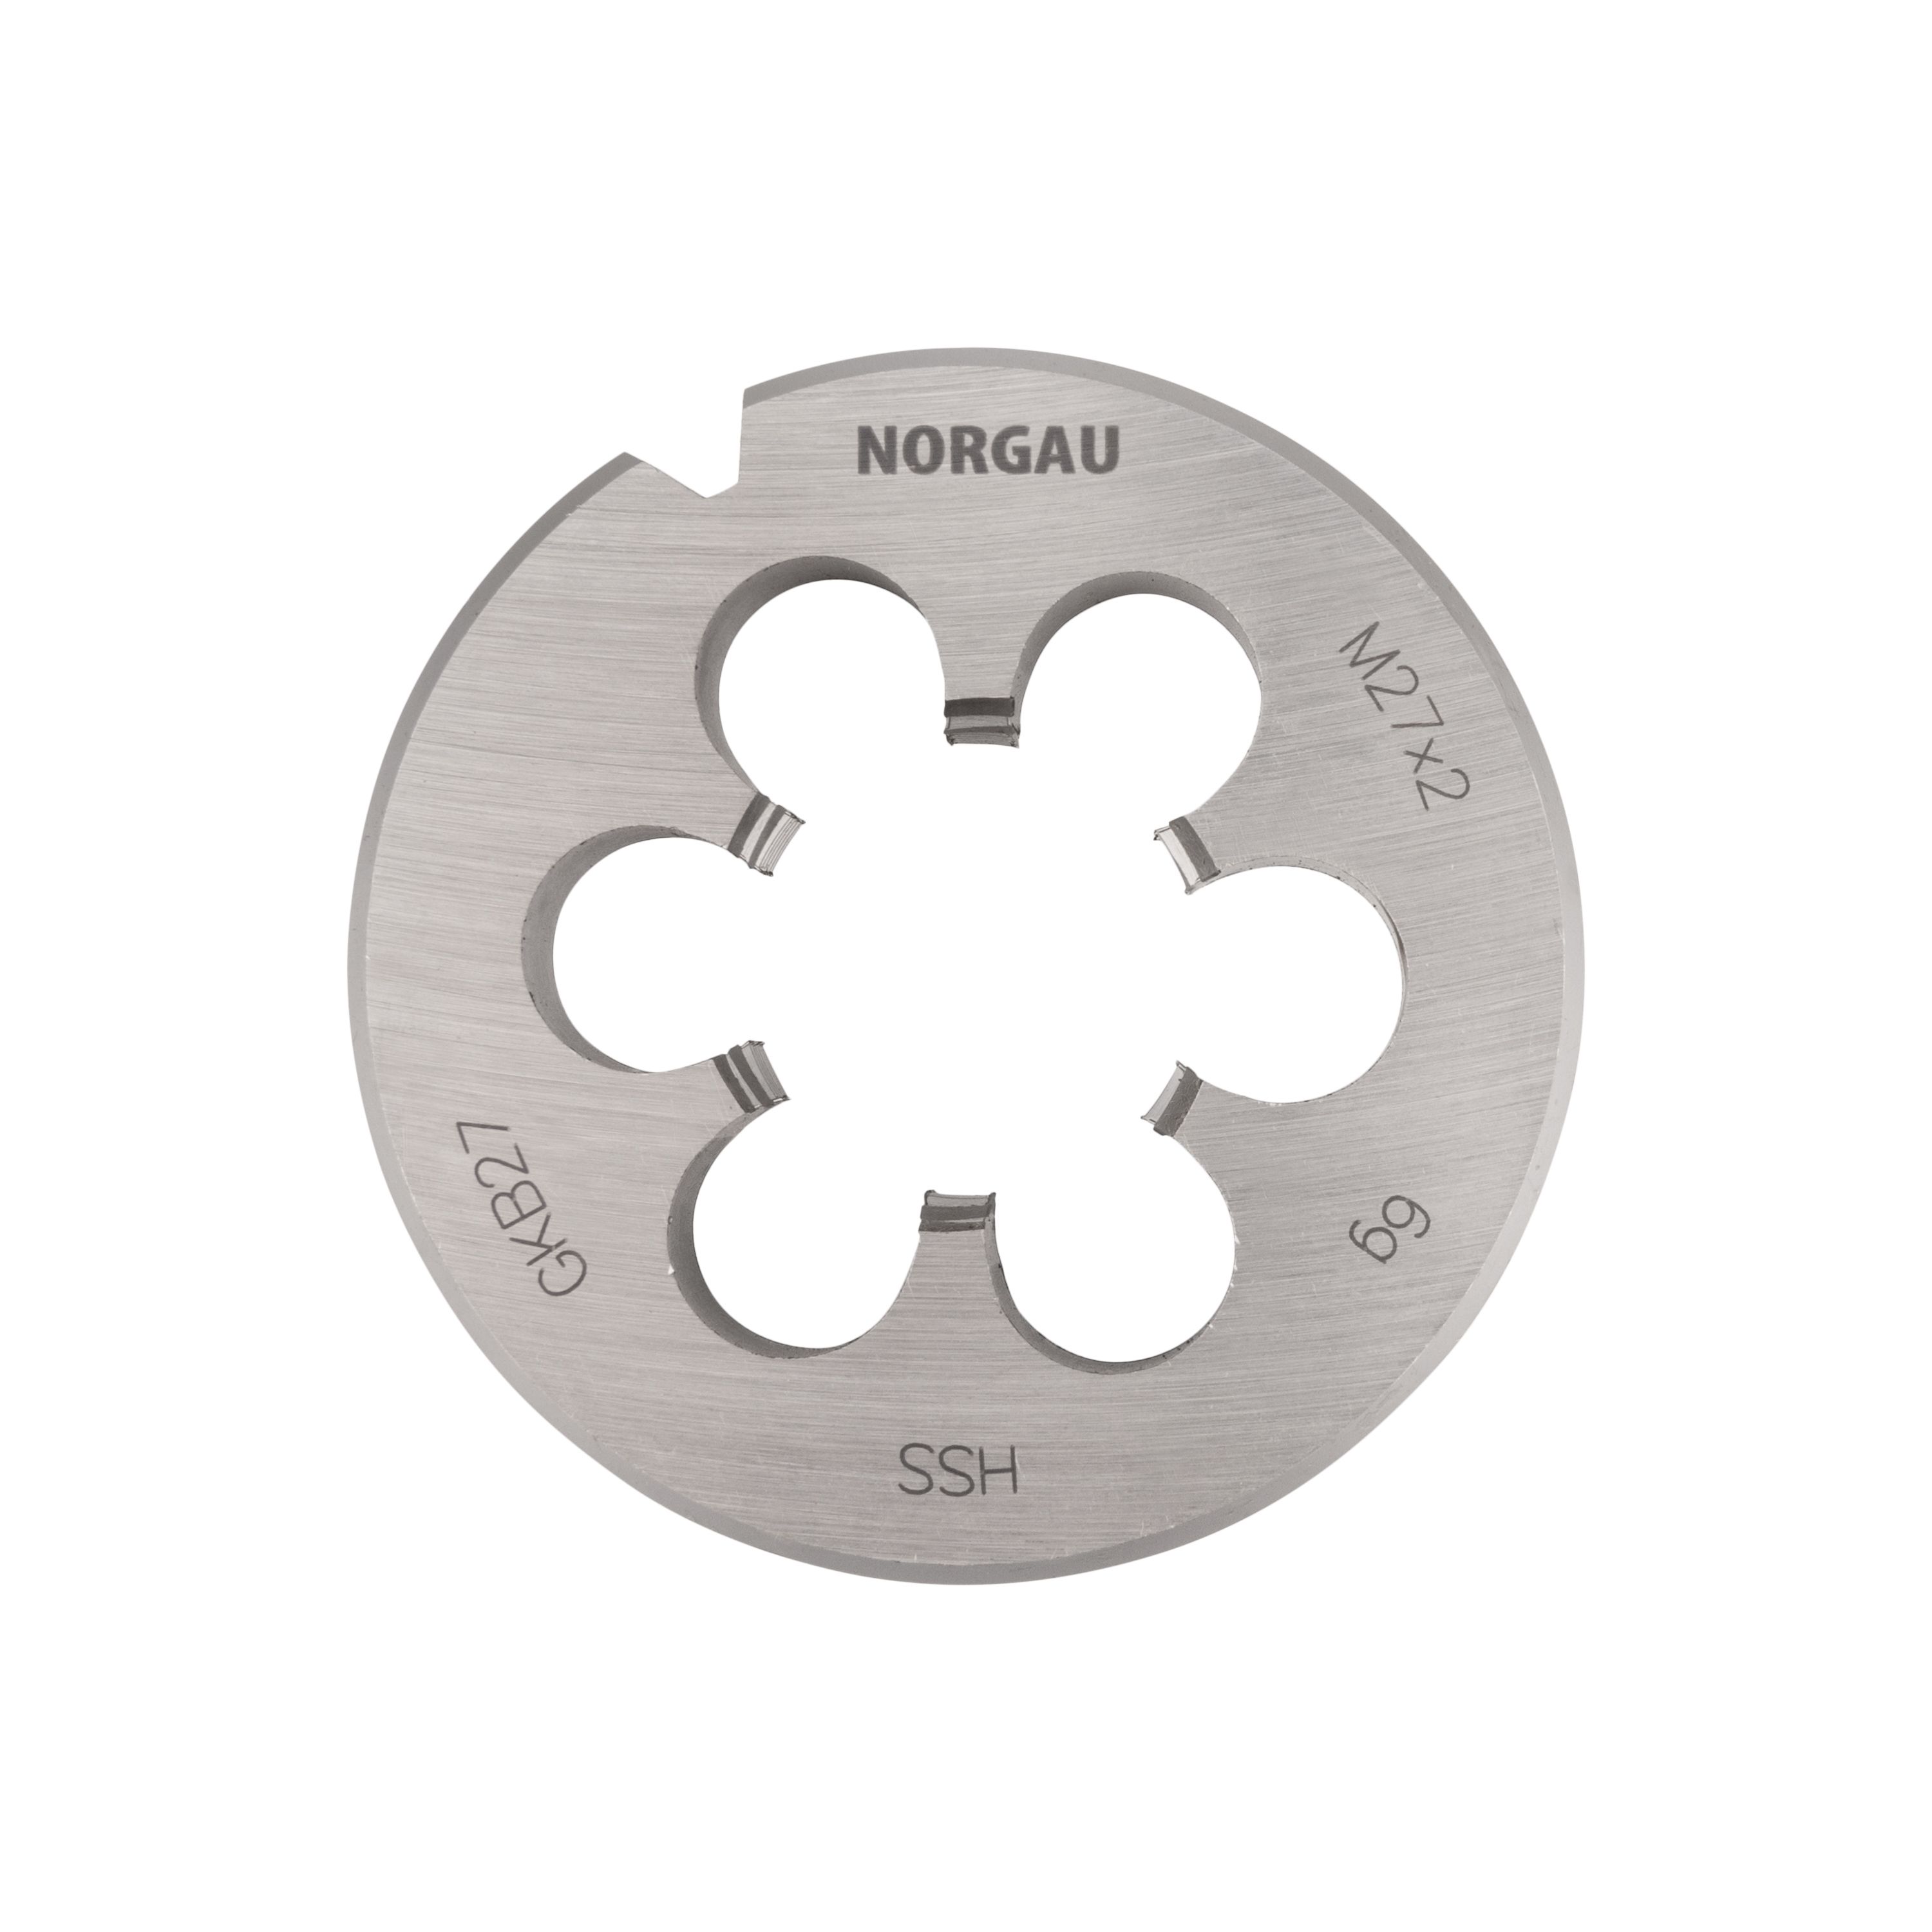 Плашка NORGAU Industrial MF27x2х65 мм. метрическая, угол 60, по DIN223, HSS плашка norgau industrial m24x1 5х55 мм метрическая угол 60° по din223 hss